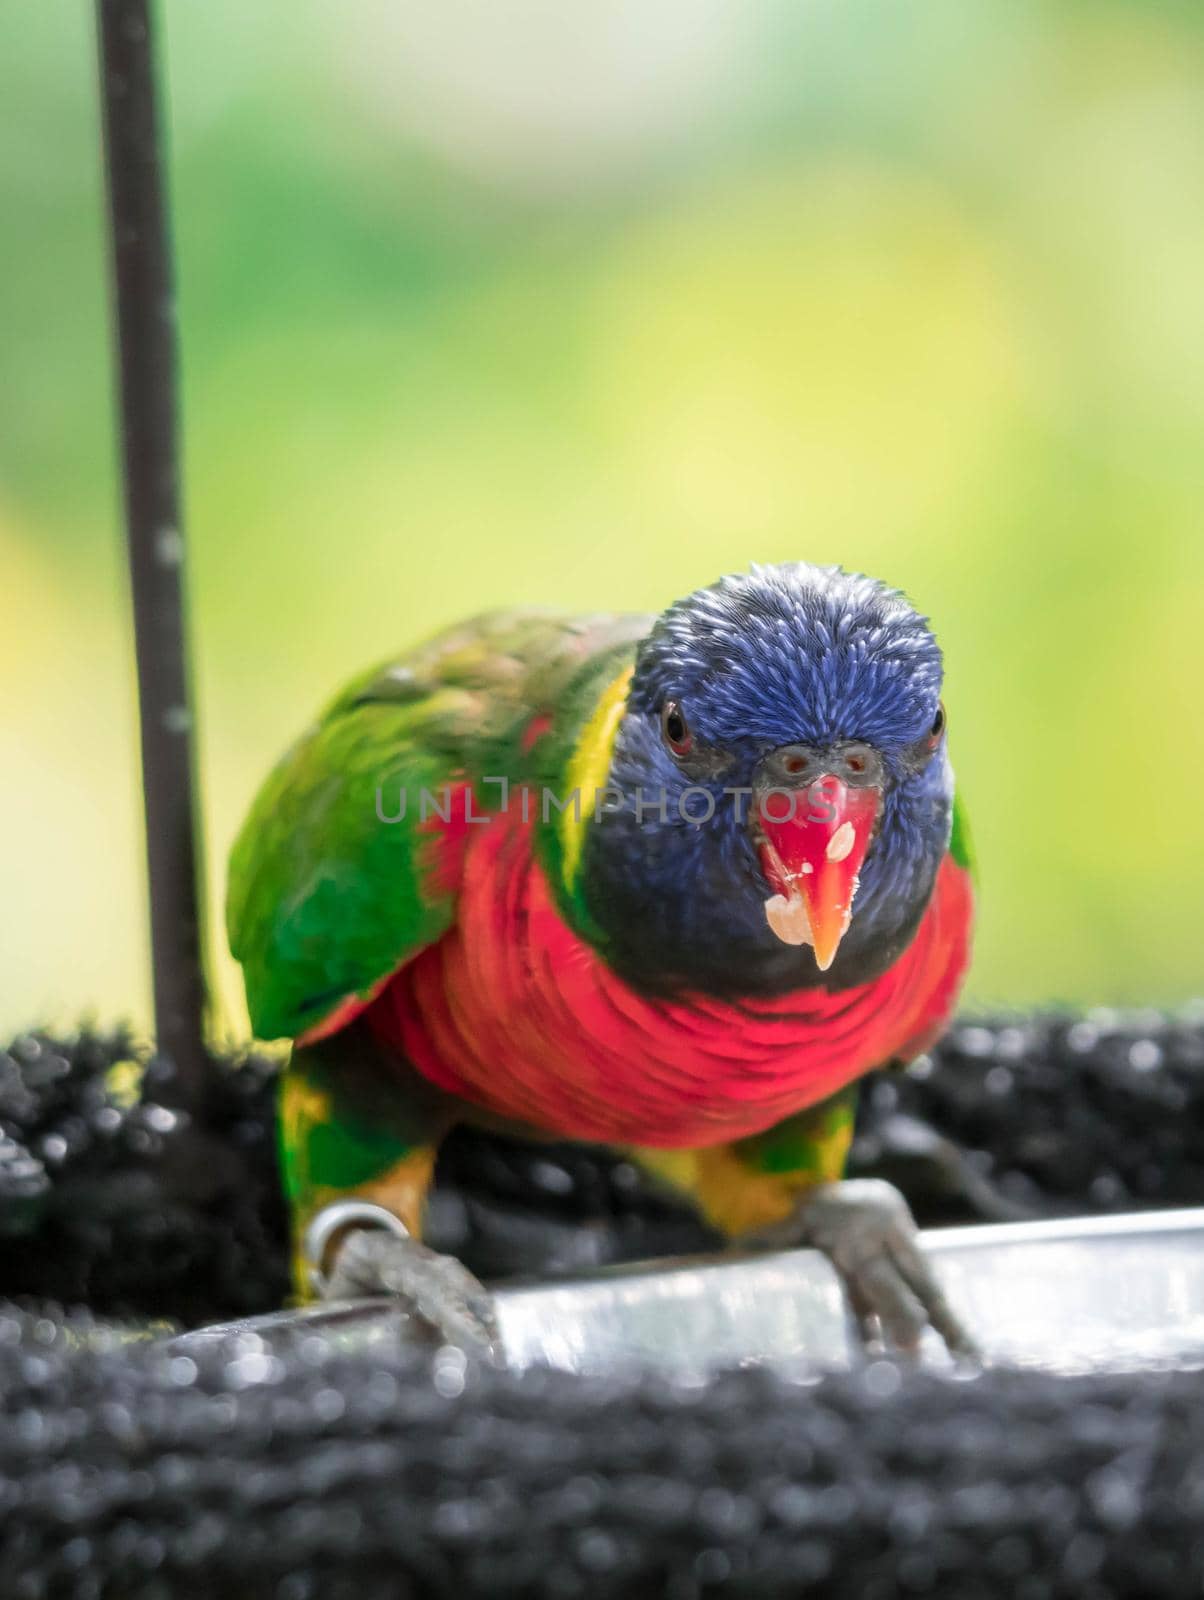 Rainbow lorikeet, Trichoglossus haematodus moluscanus, is beautifully colored parrot by billroque